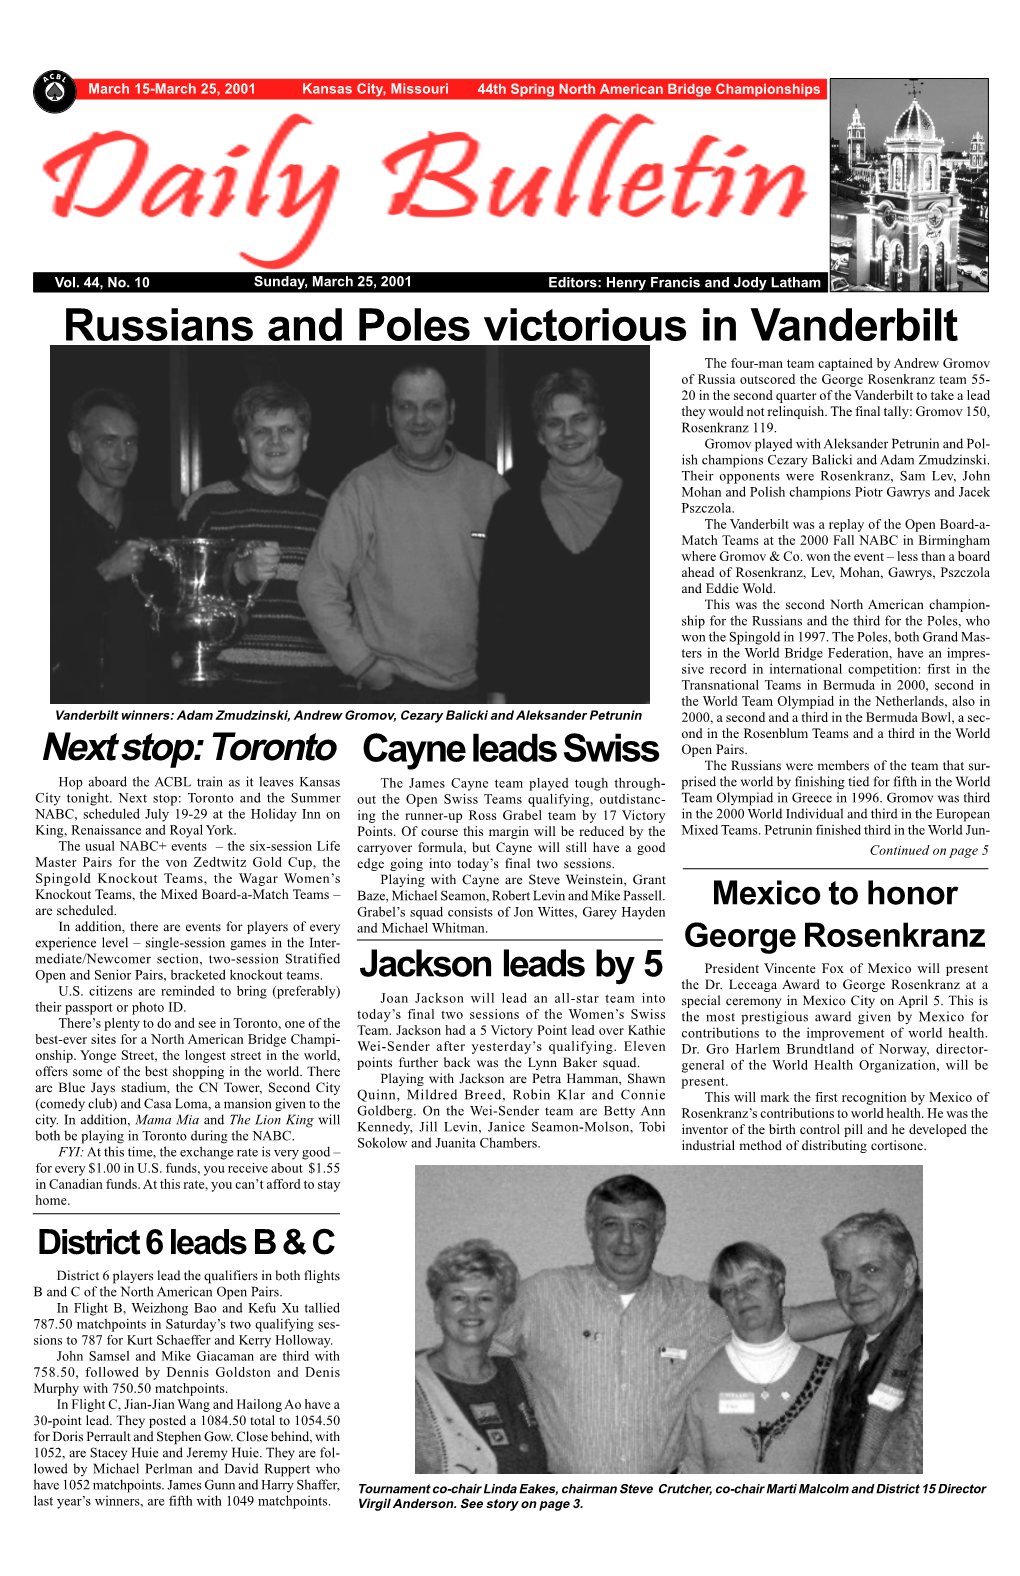 Russians and Poles Victorious in Vanderbilt